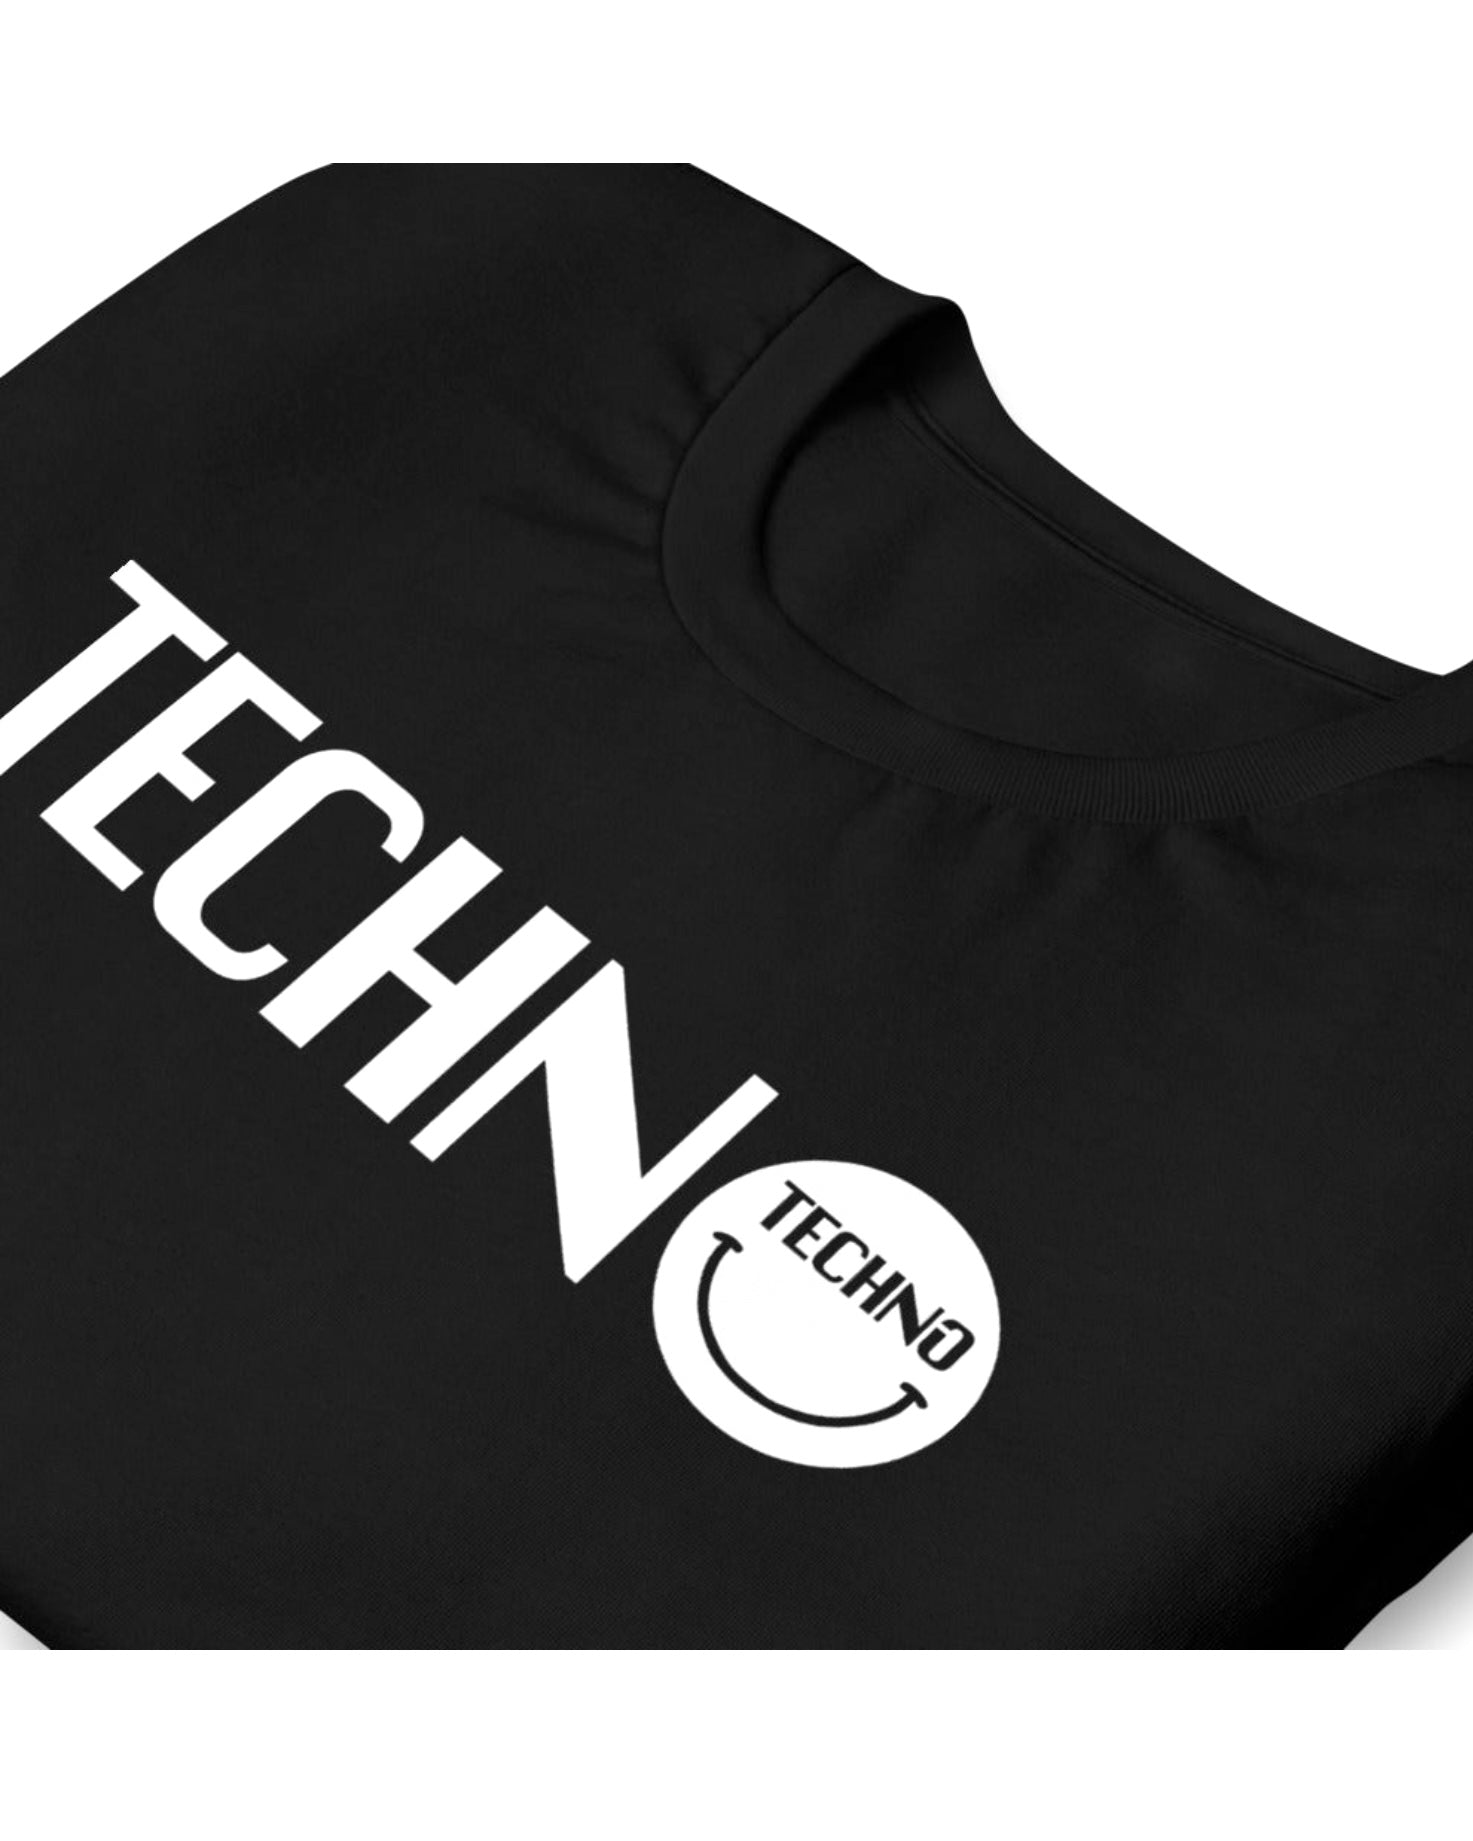 Techno Head T-Shirt, T-Shirt, - One Stop Rave